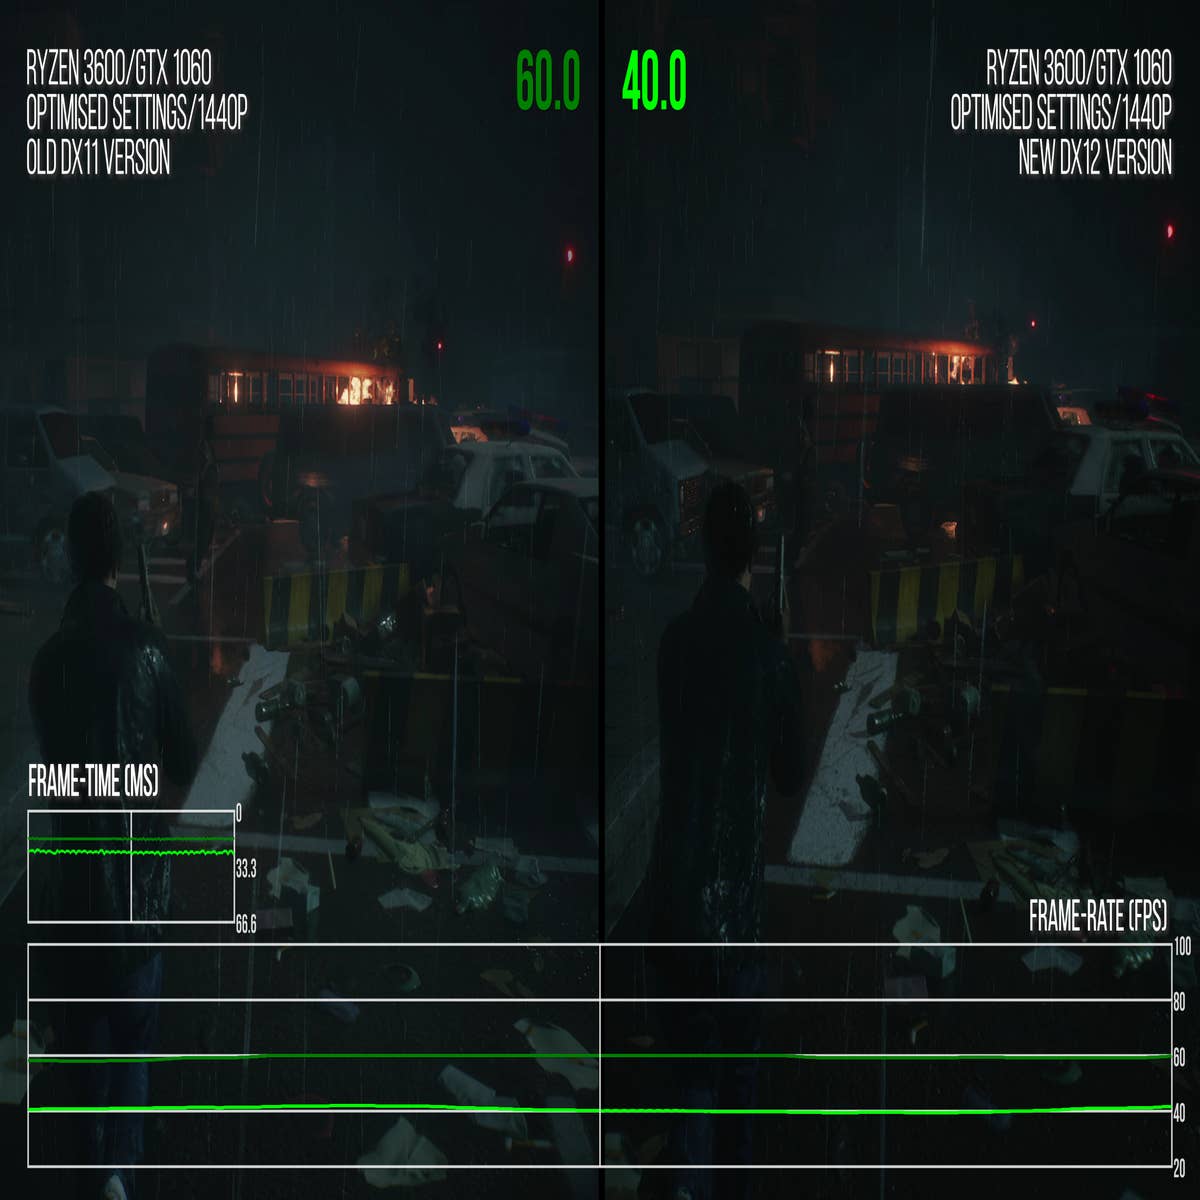 Resident Evil 2 Remake PC Performance Explored